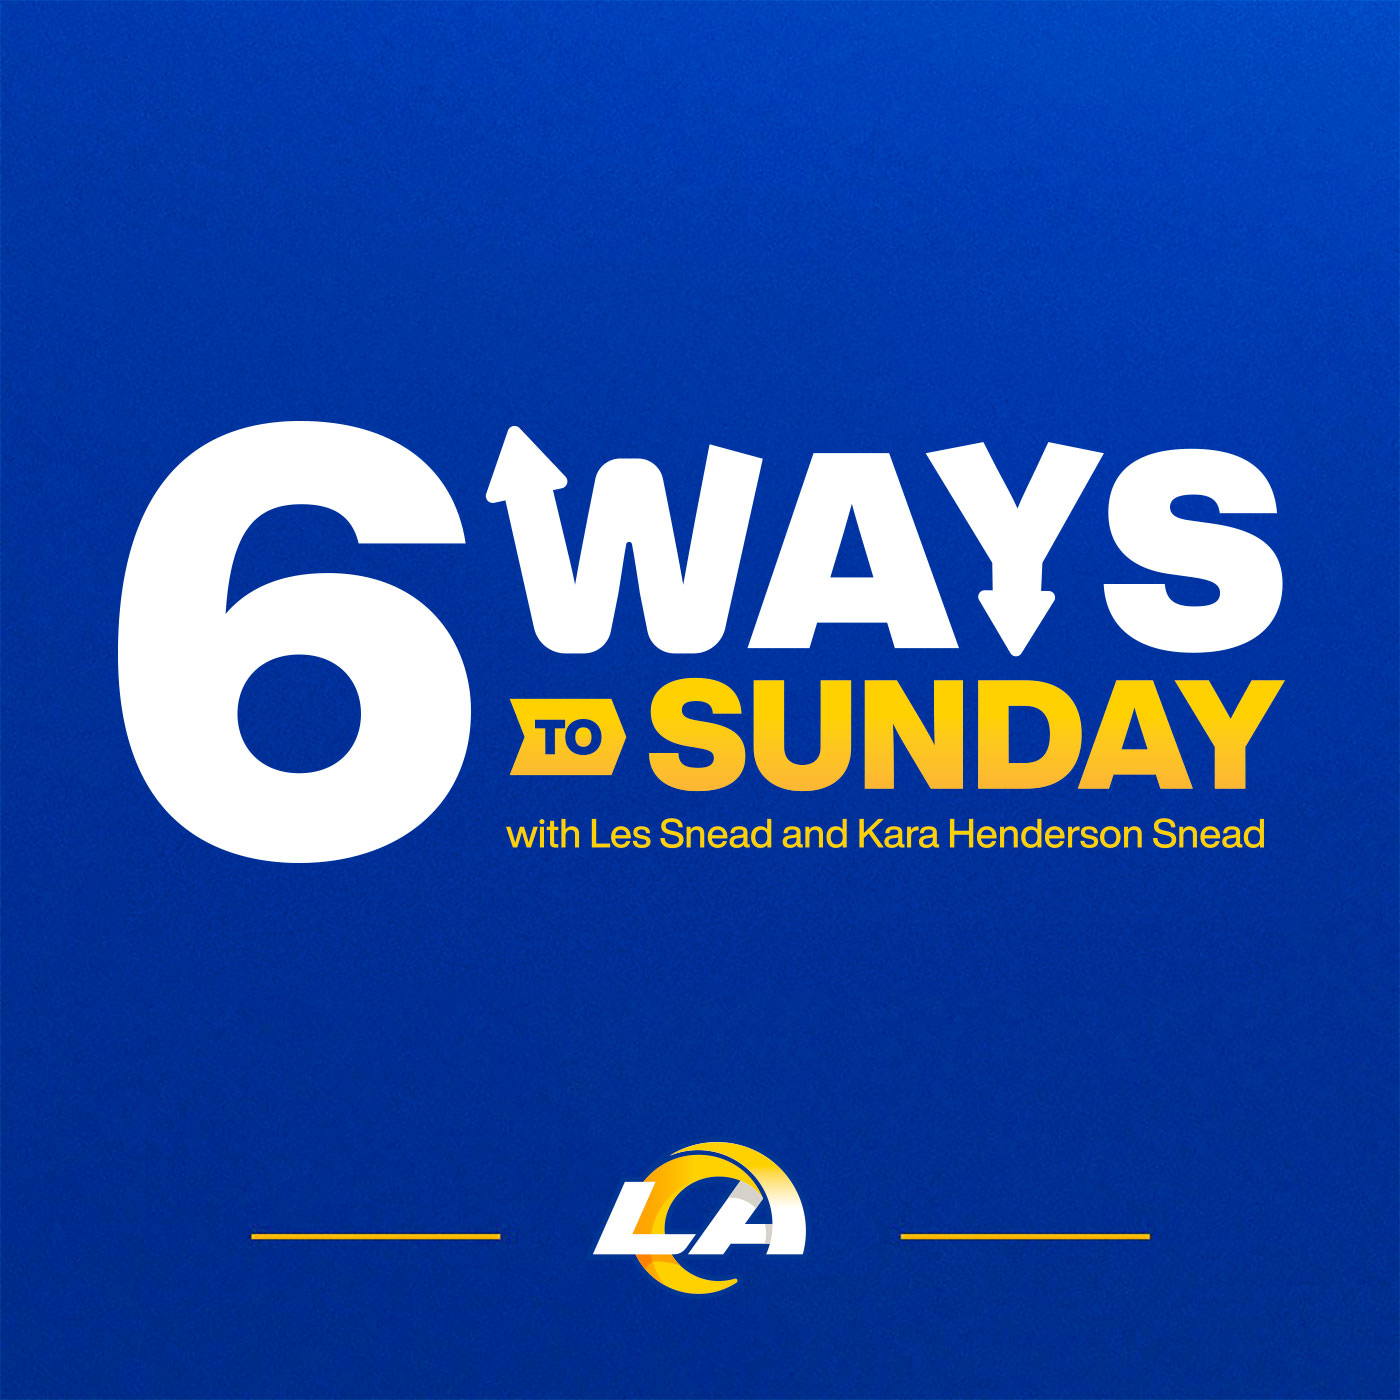 6 Ways to Sunday